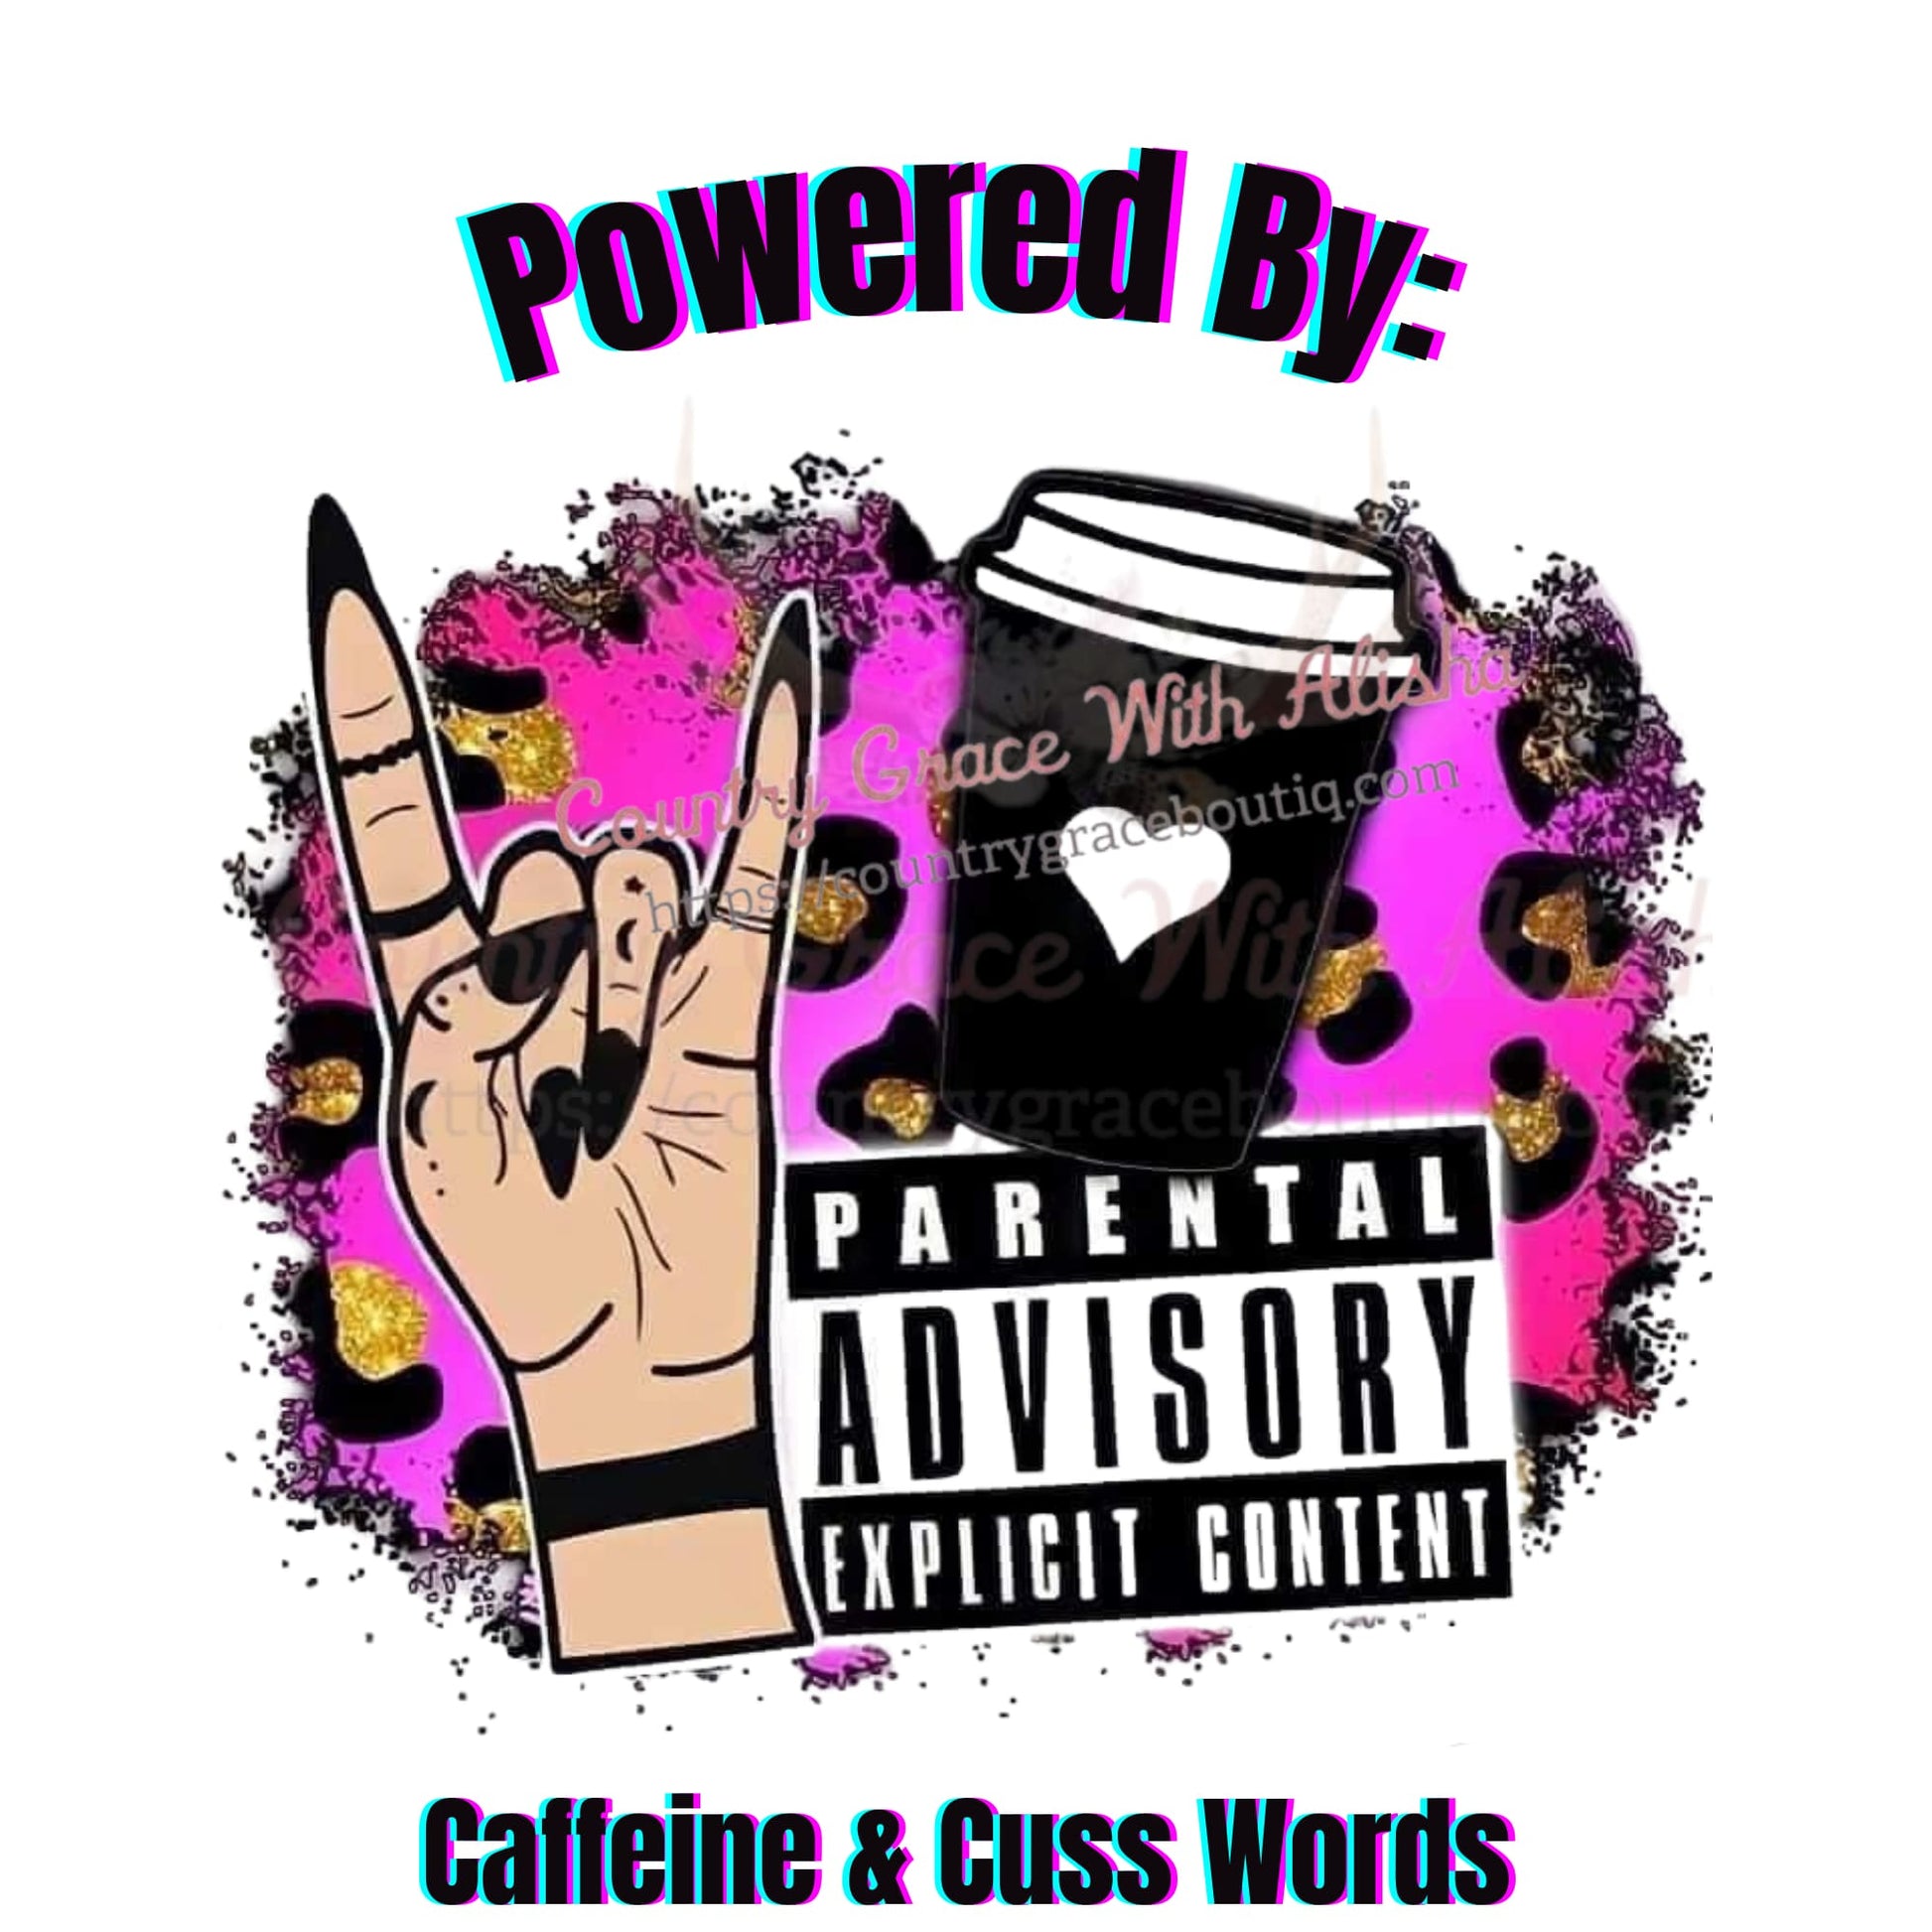 Caffeine And Cuss Words Sublimation Transfer - Sub $1.50 